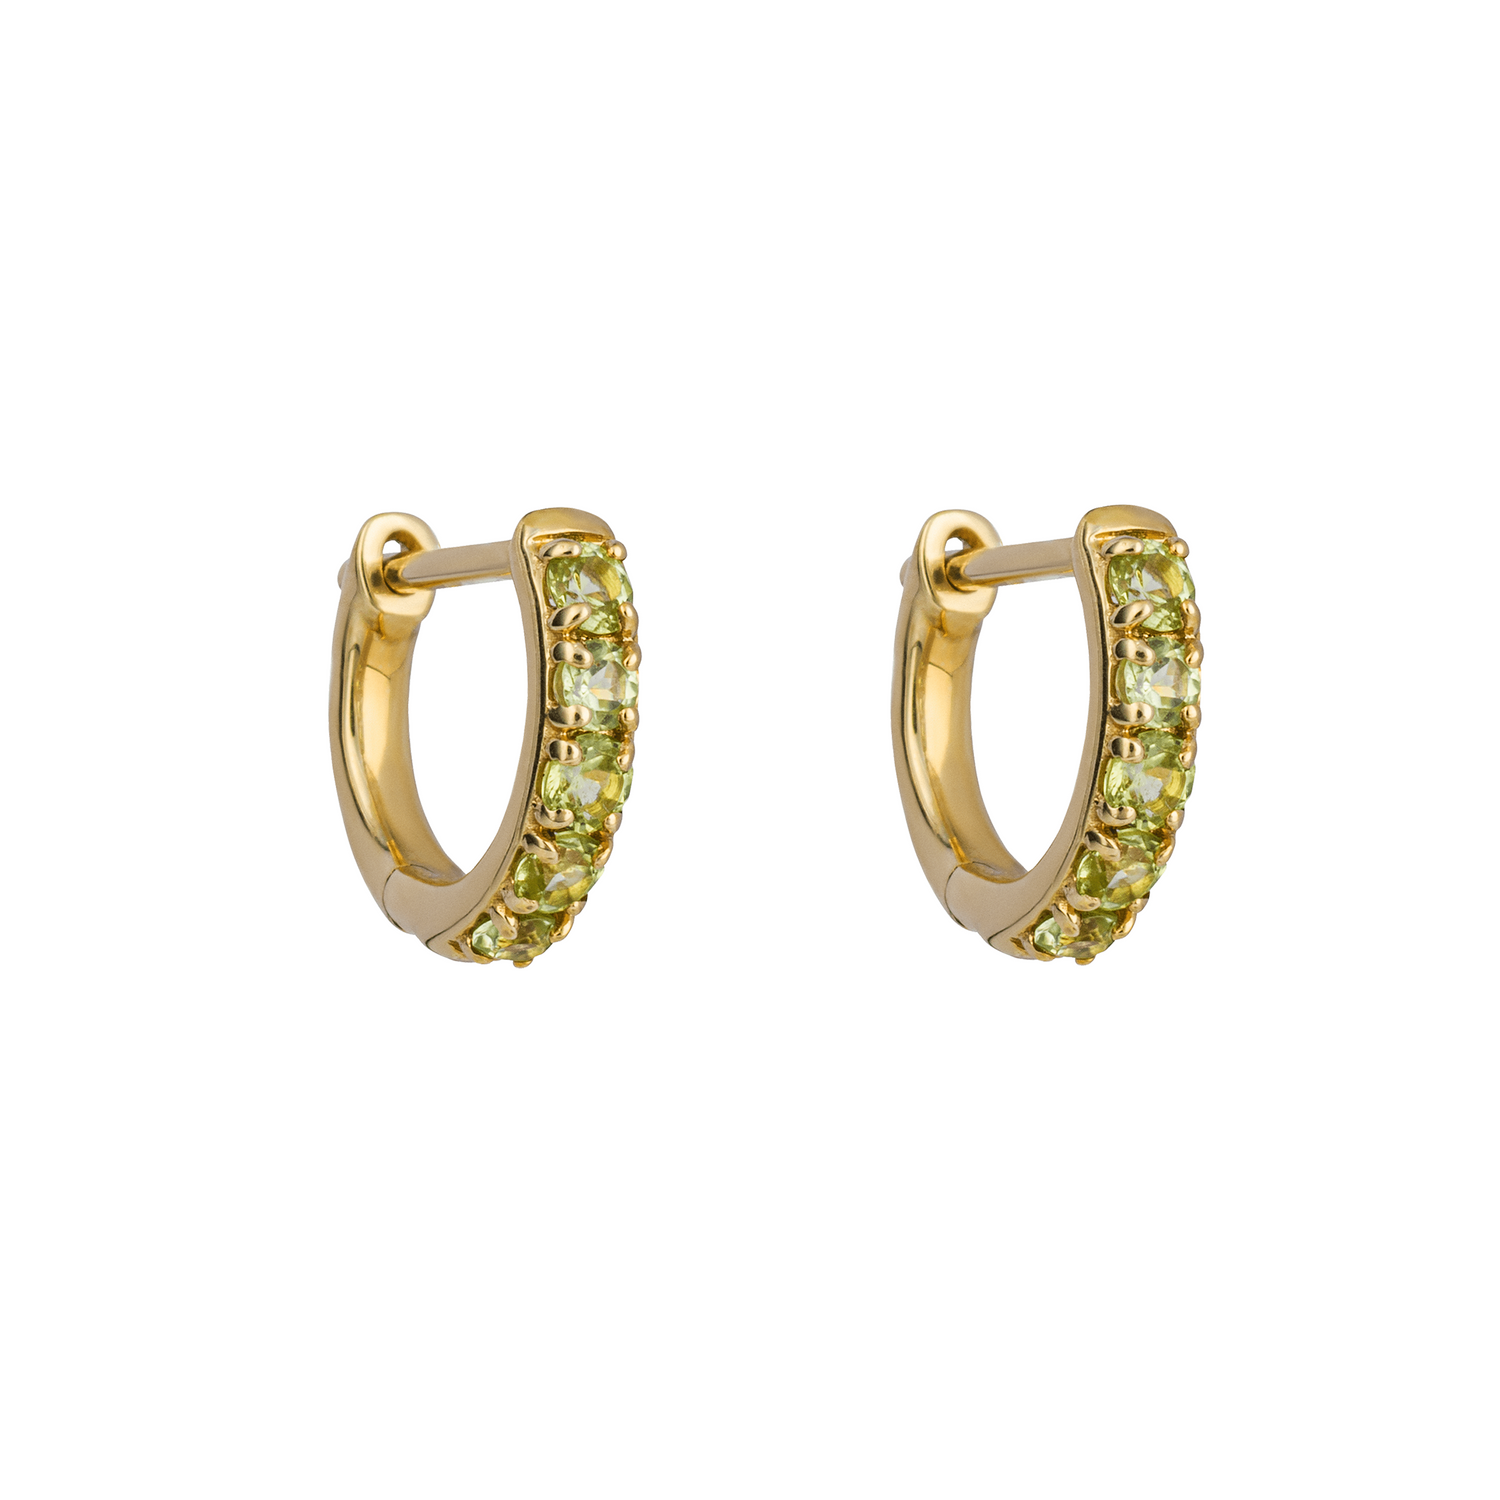 Peridot Hoop Earrings in 9ct Yellow Gold - Robert Anthony Jewellers, Edinburgh